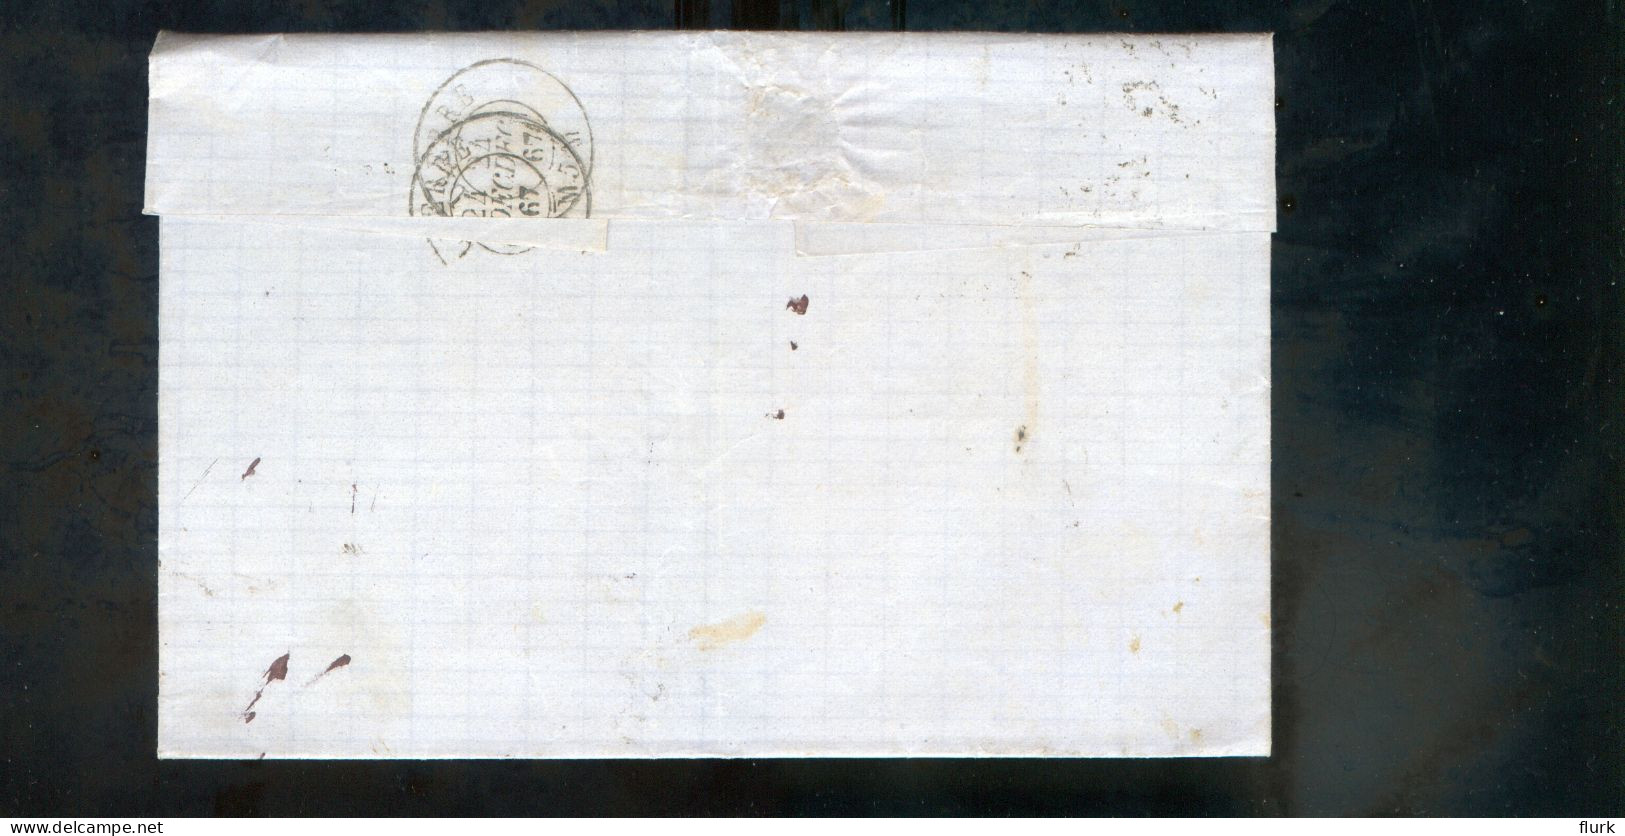 België OCB18 Gestempeld Op Brief Bruxelles-Lierre 1867 Perfect (2 Scans) - 1865-1866 Profiel Links